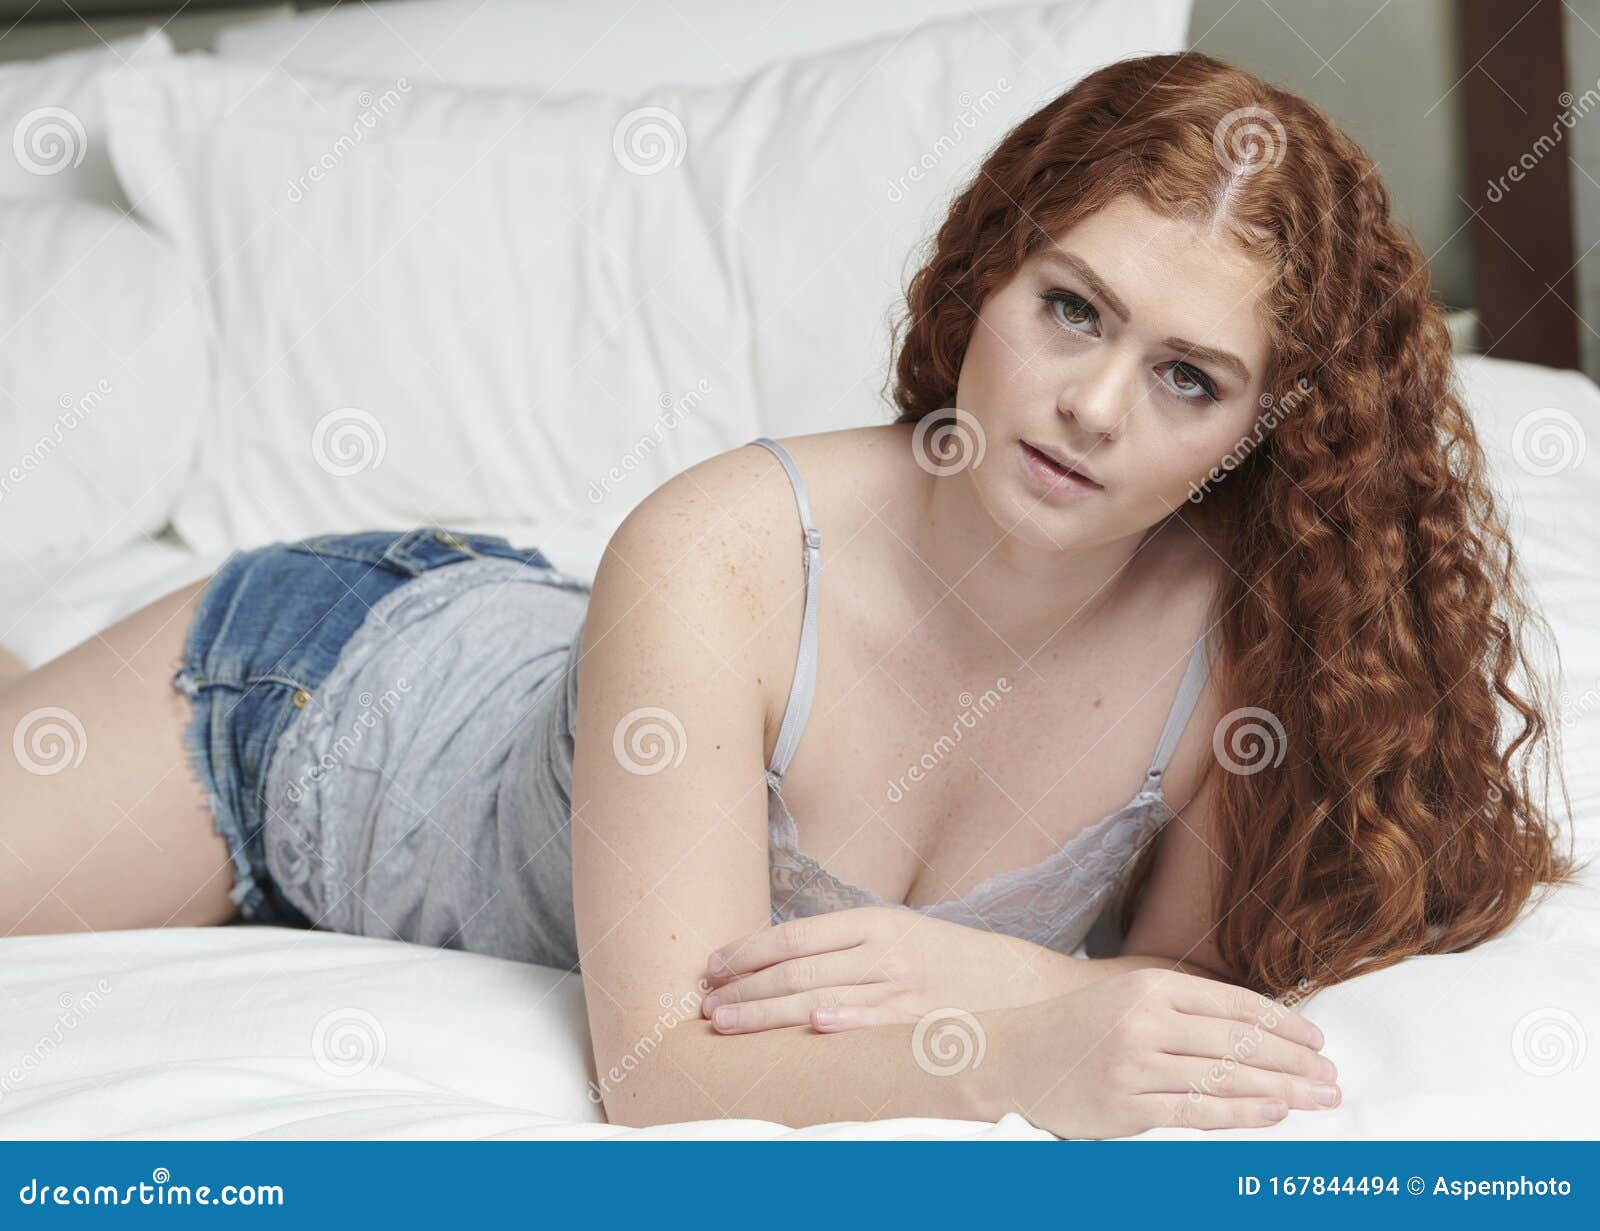 cute redhead pose hot nude photo